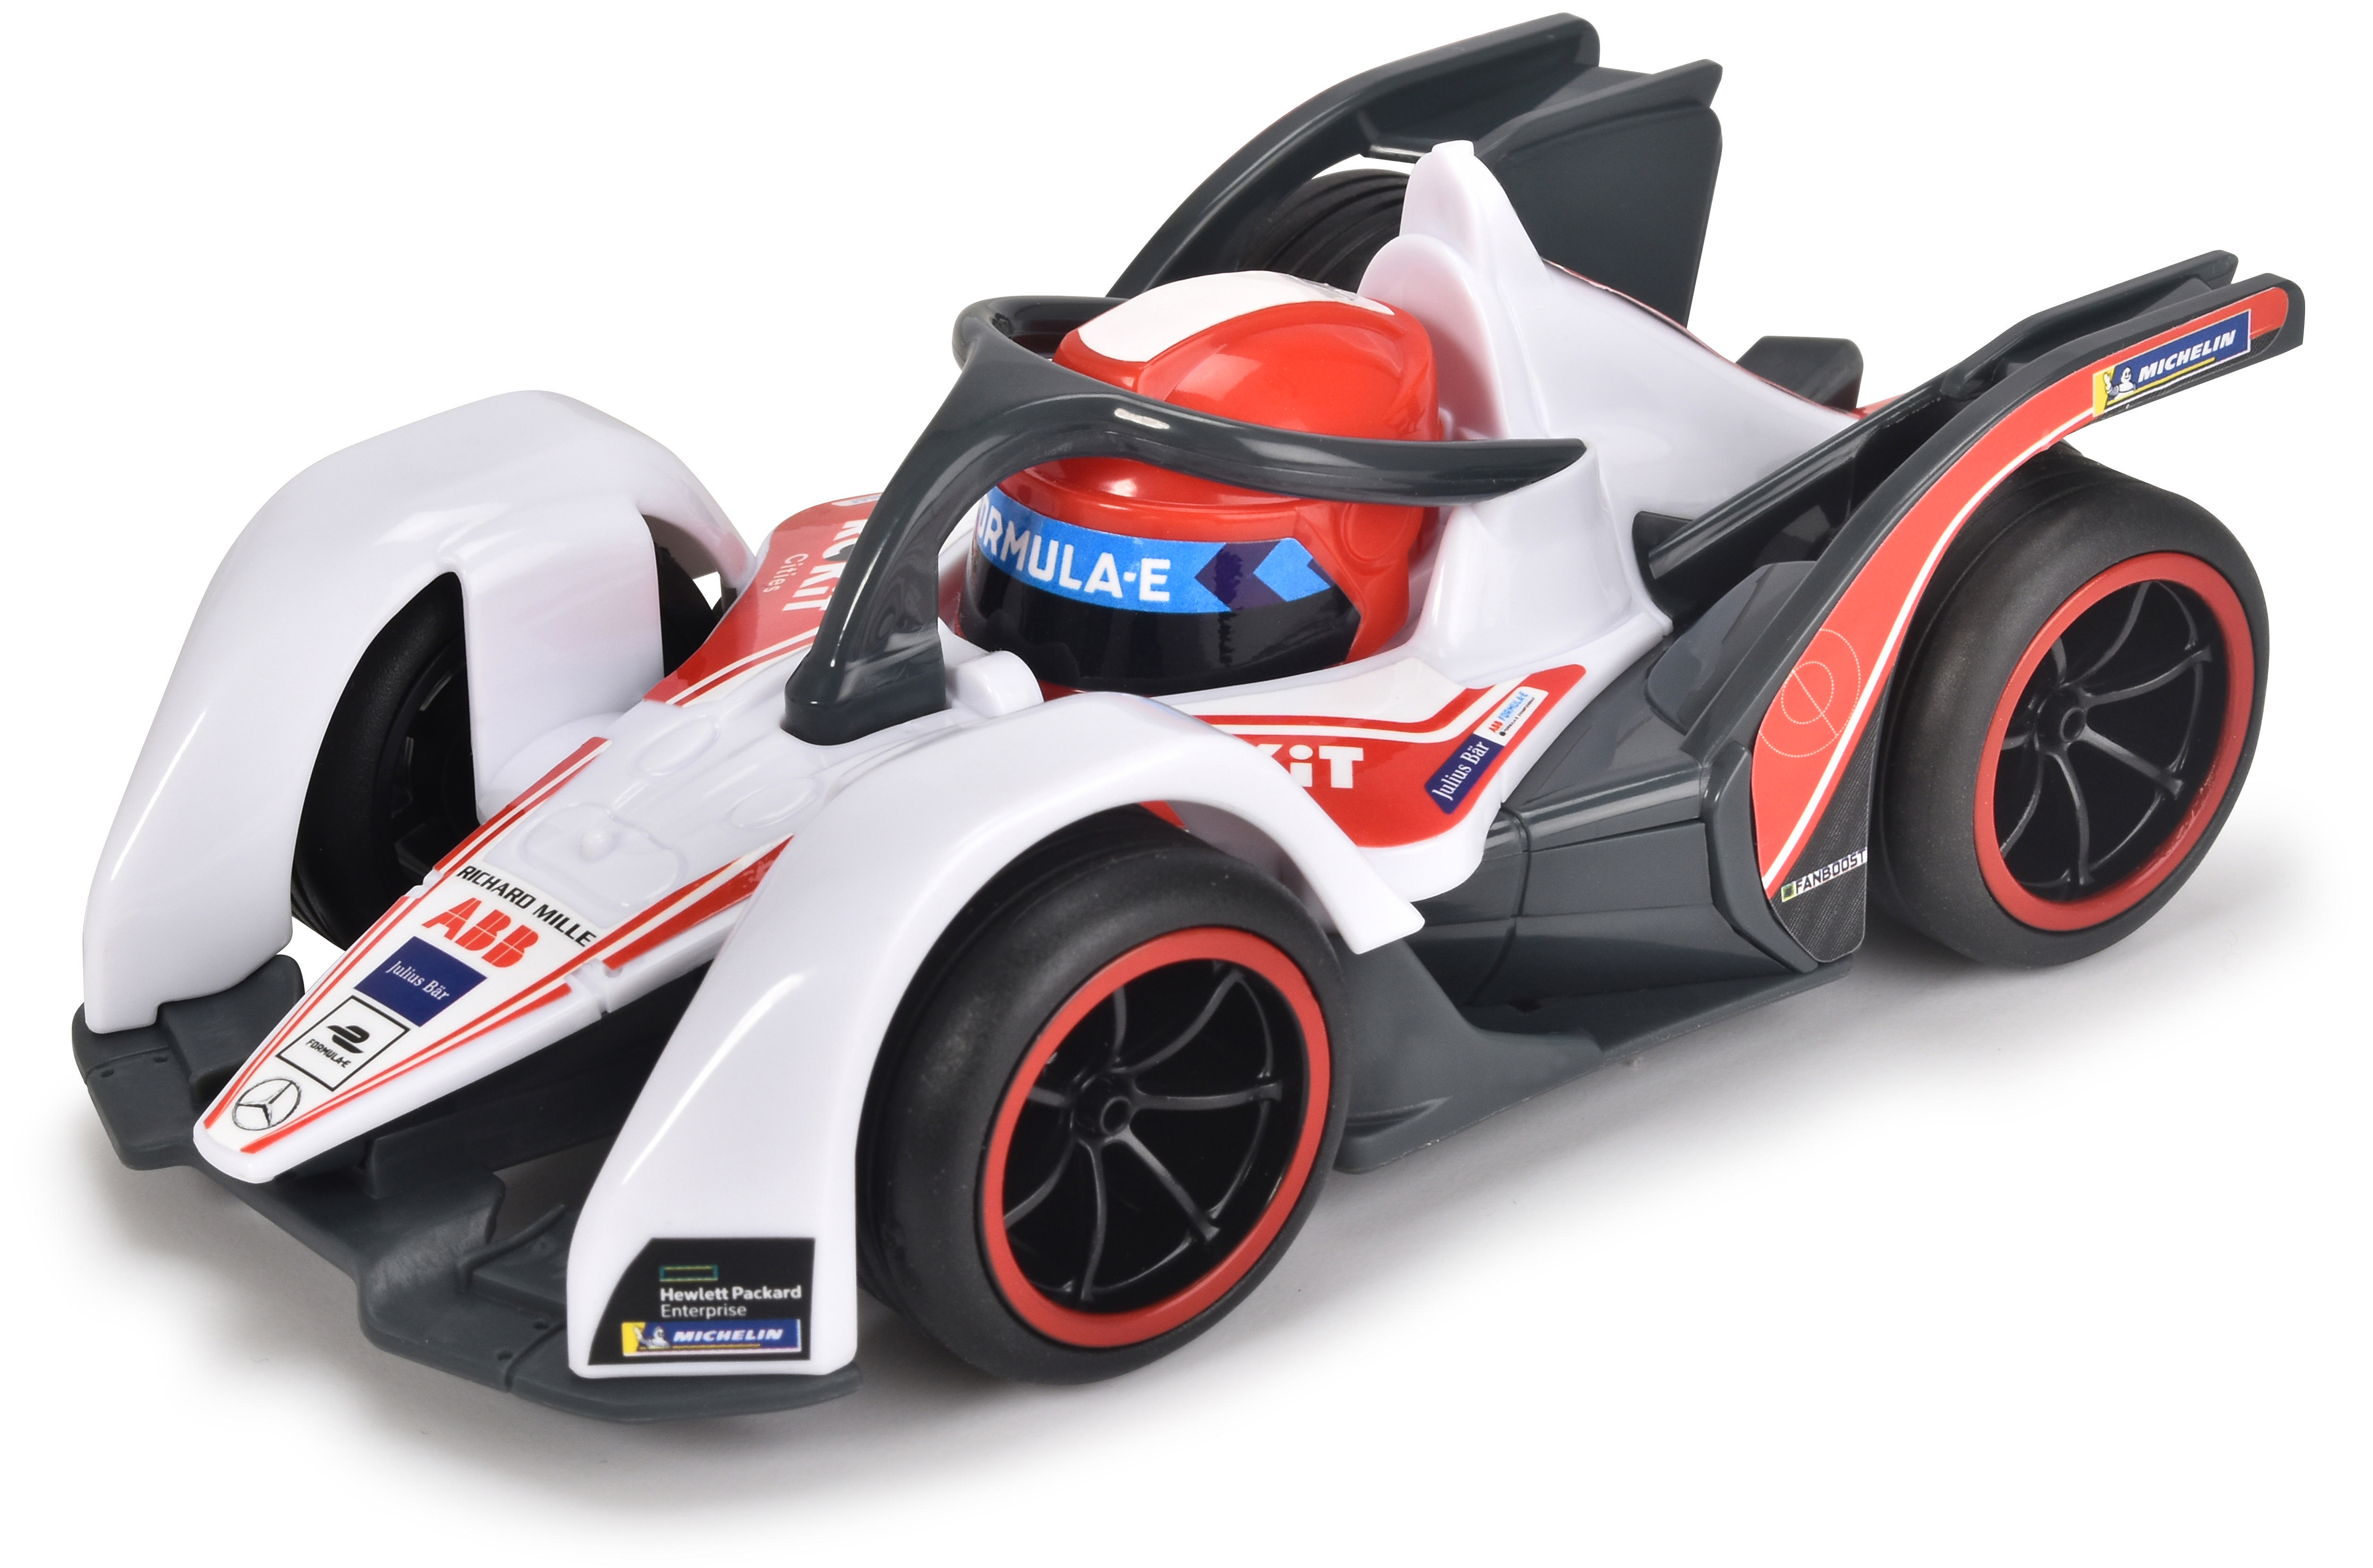 Formula DICKIE-TOYS Racer, - Mehrfarbig Spielzeugauto Pullstring E 3-sort.